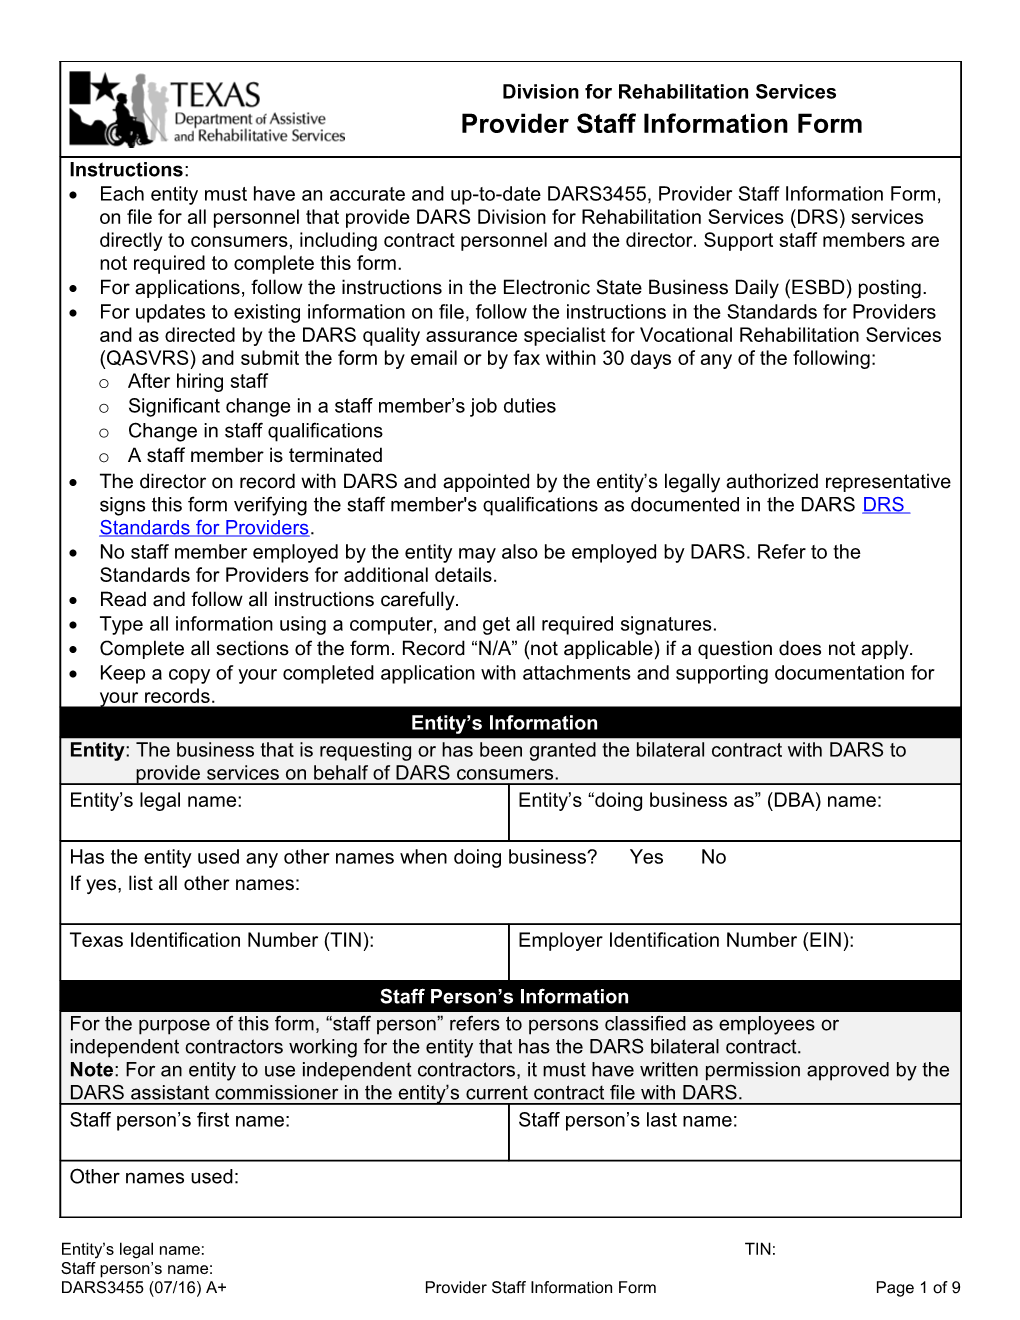 Provider Staff Information Form